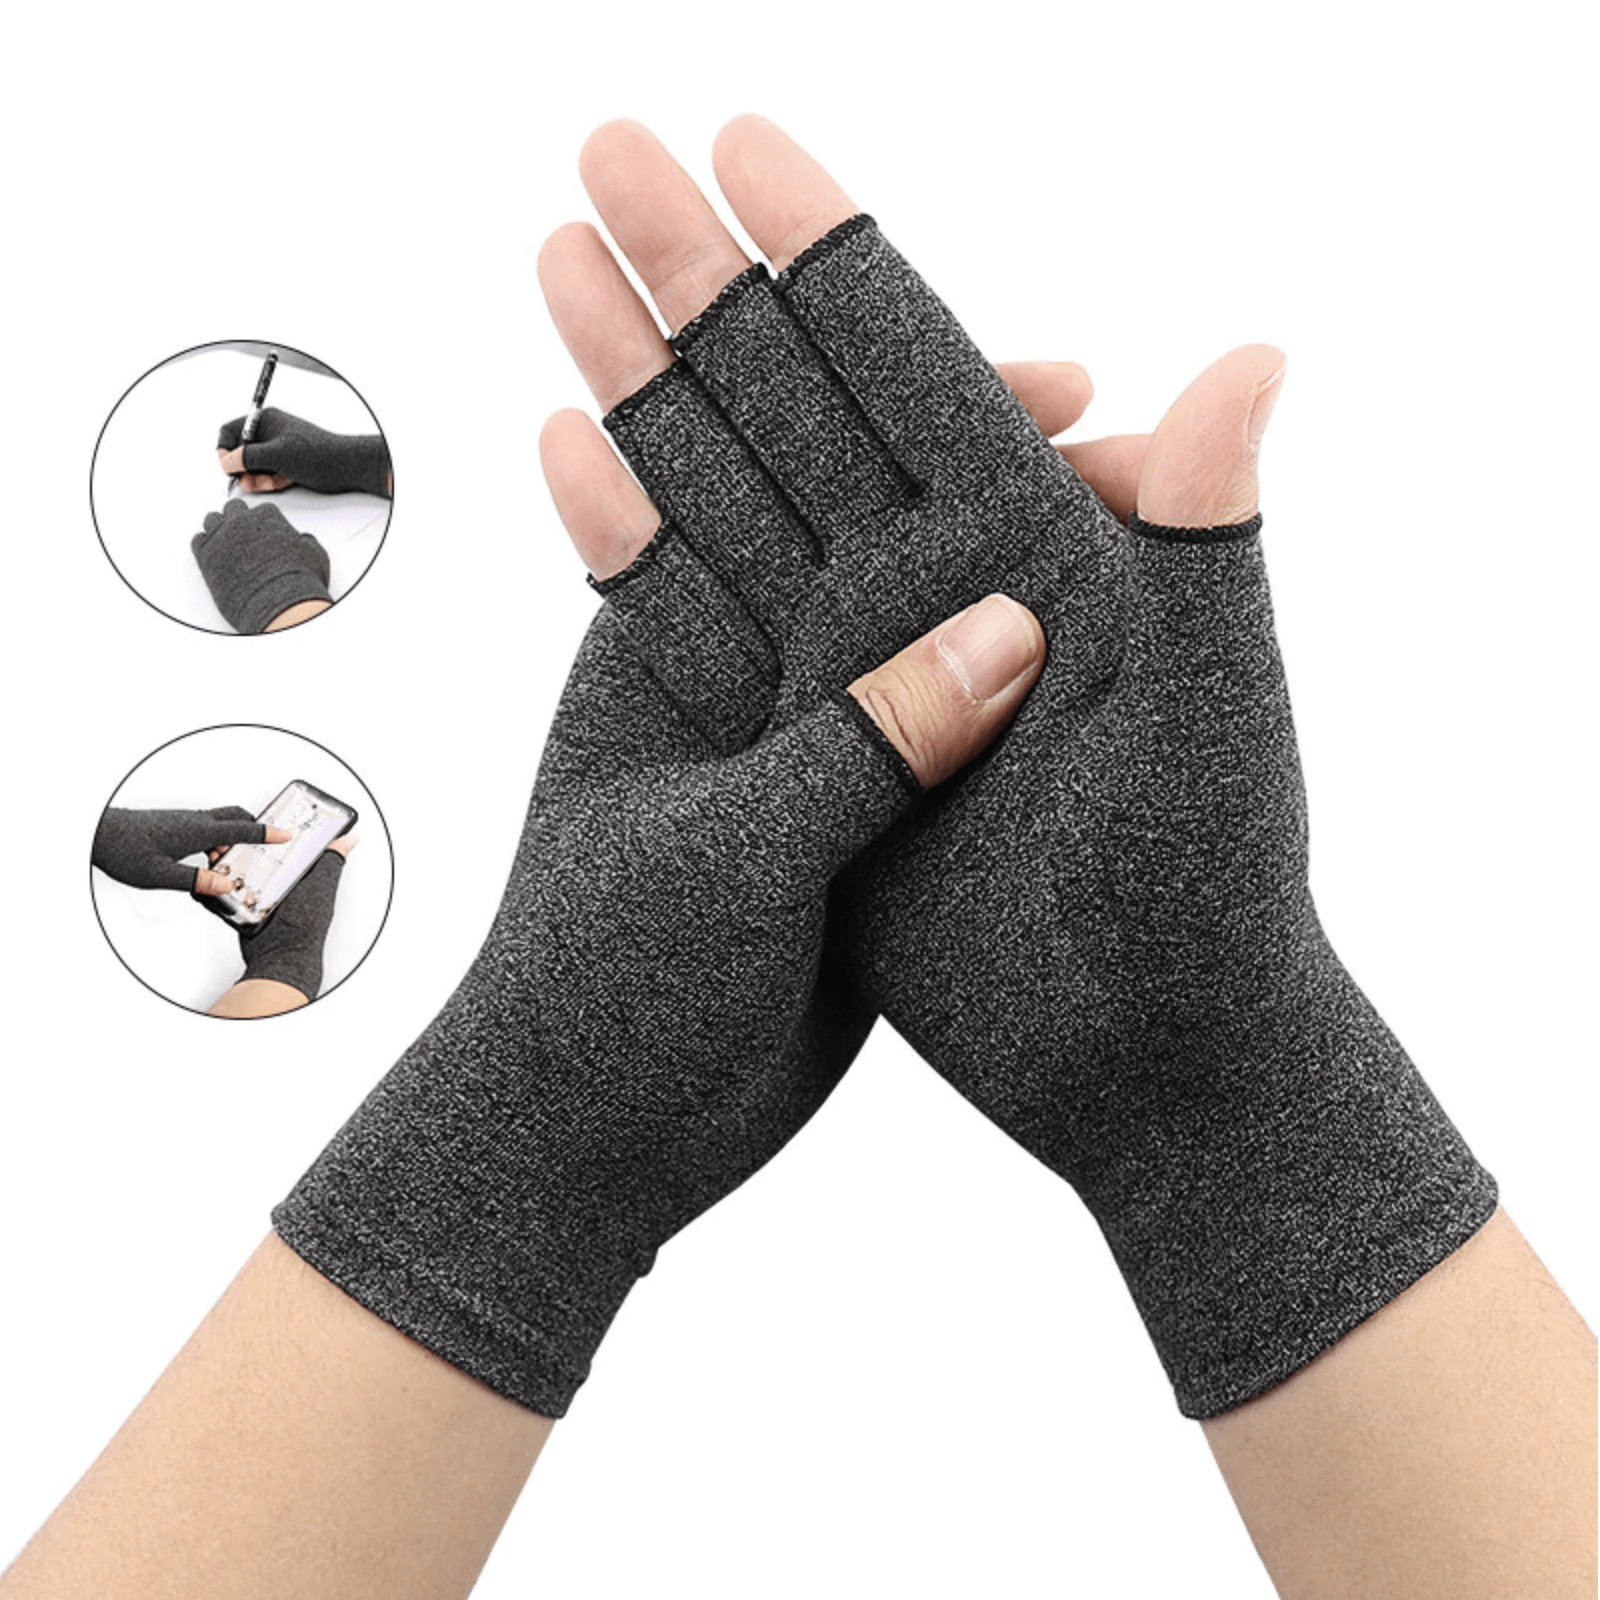 compression gloves for arthritis black